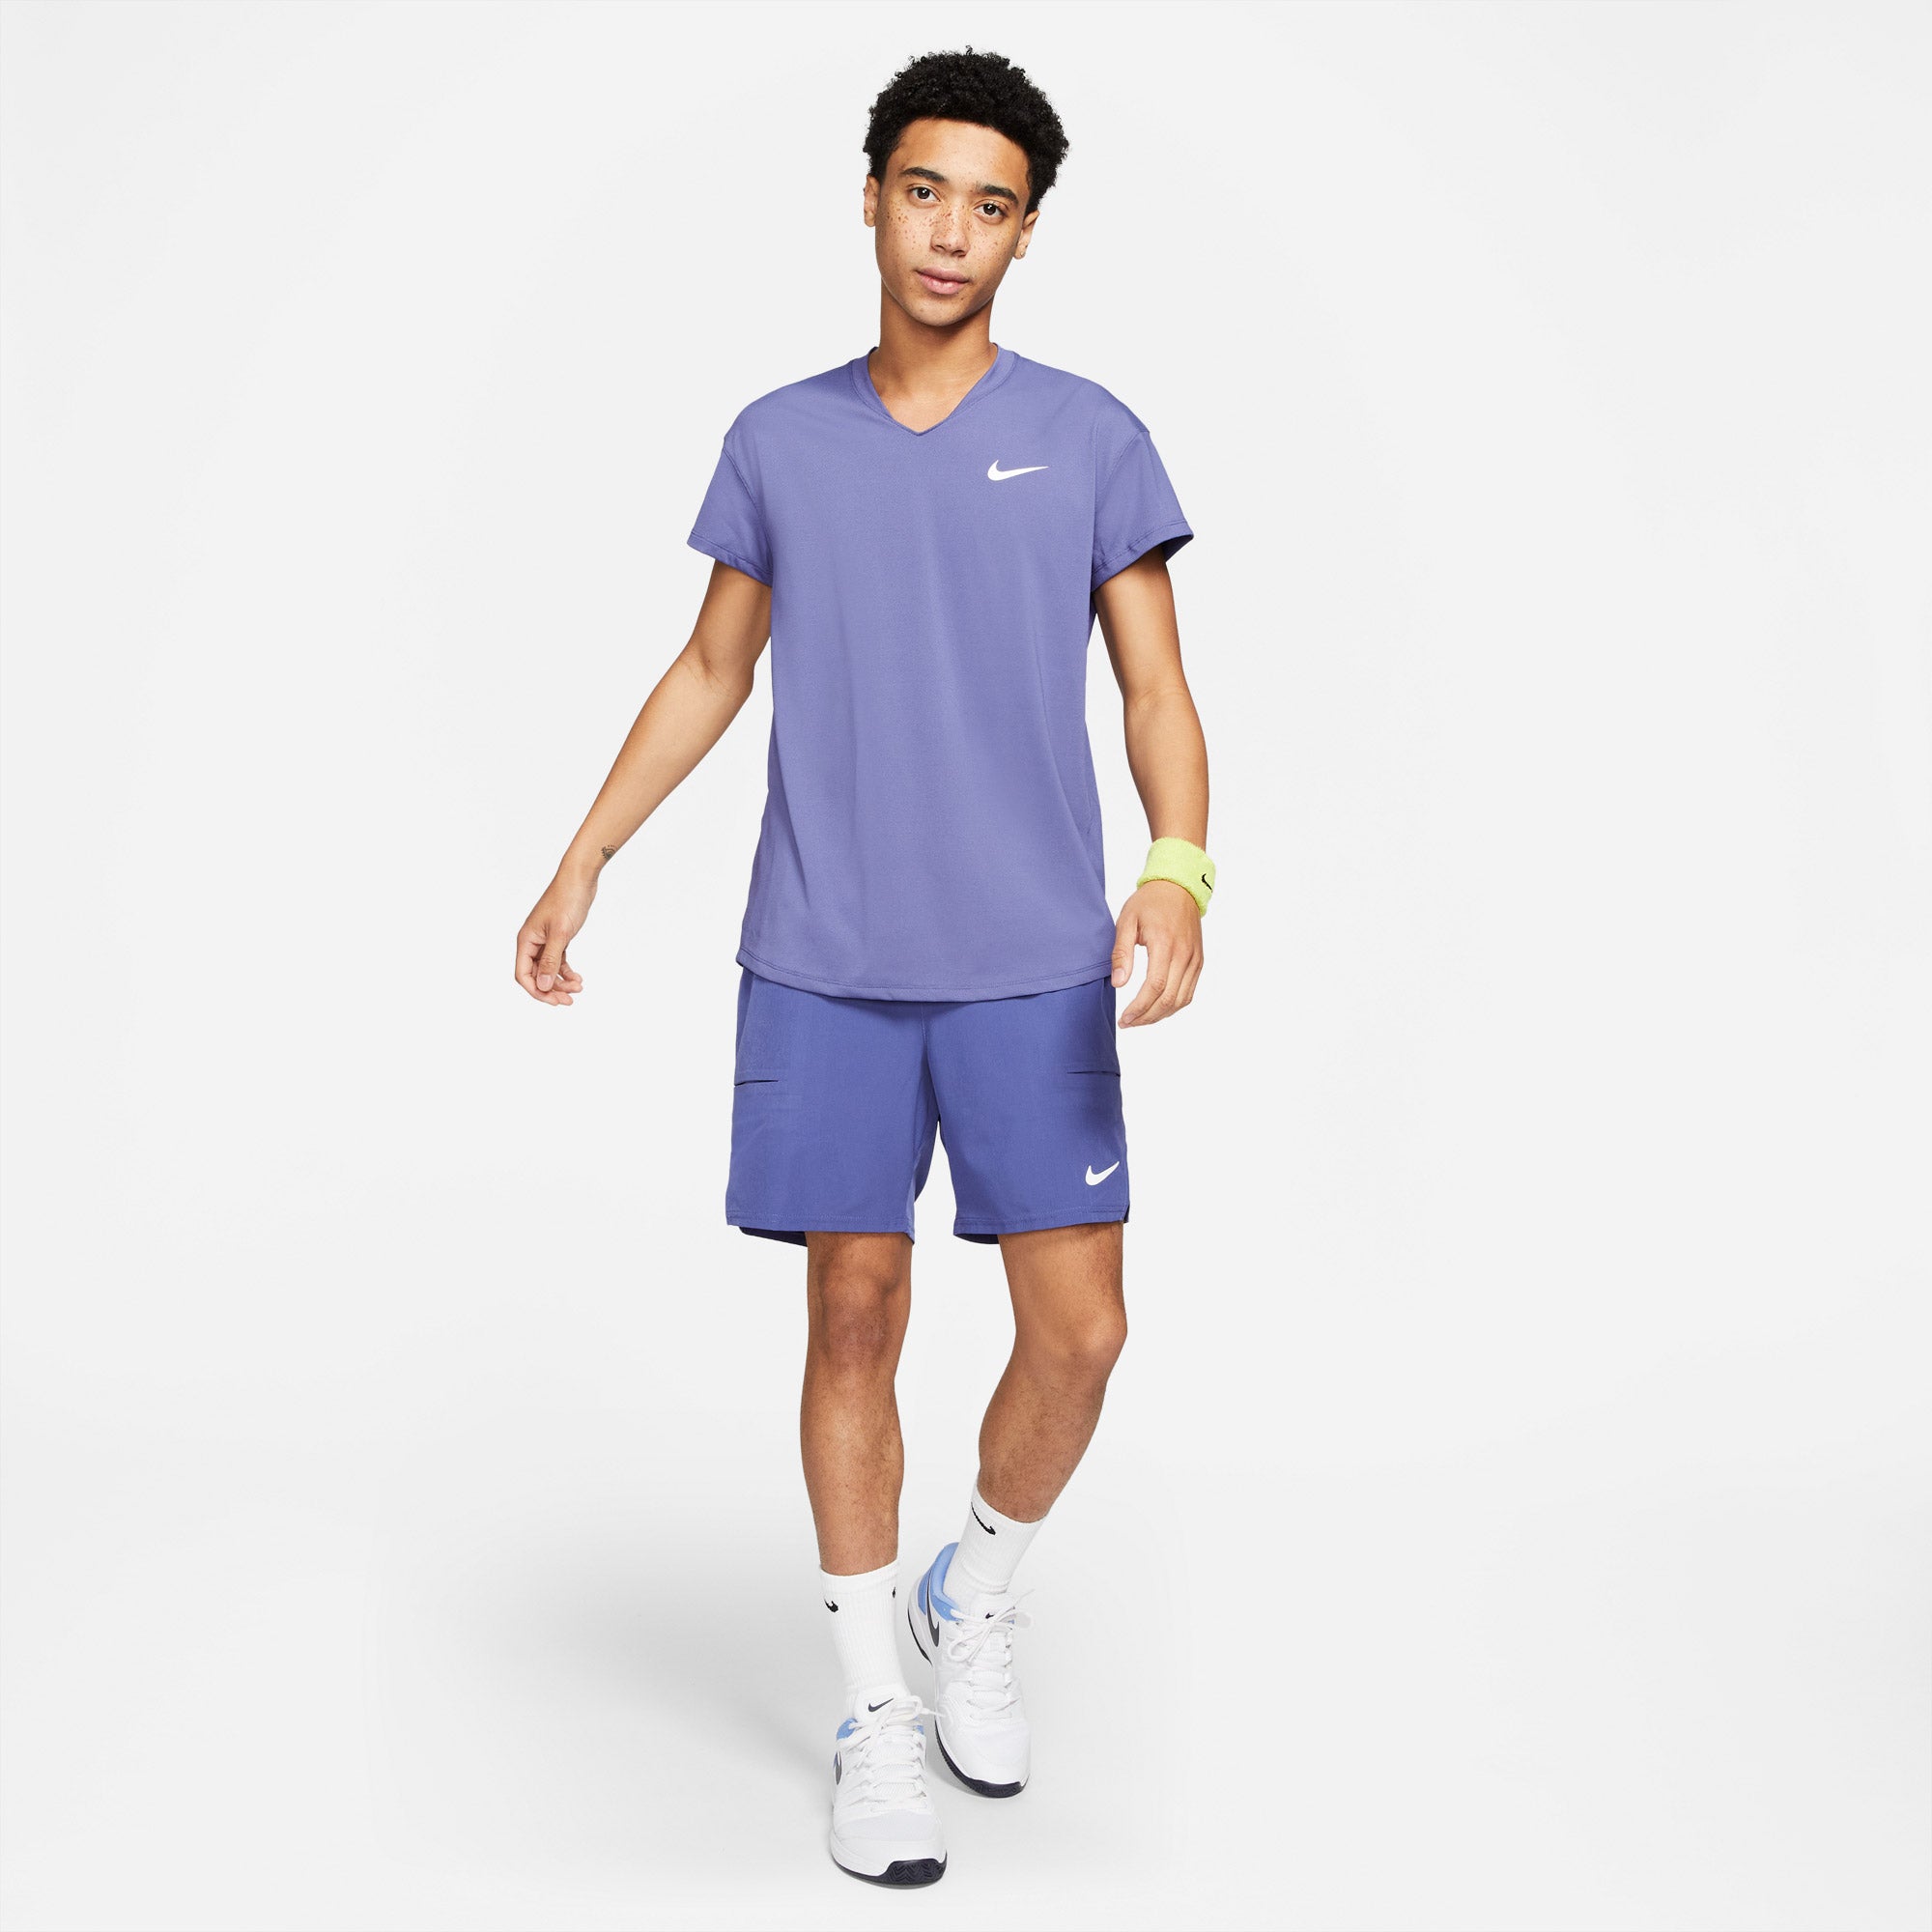 Nike Dri-FIT ADV Slam Men's Tennis Shirt Purple (3)